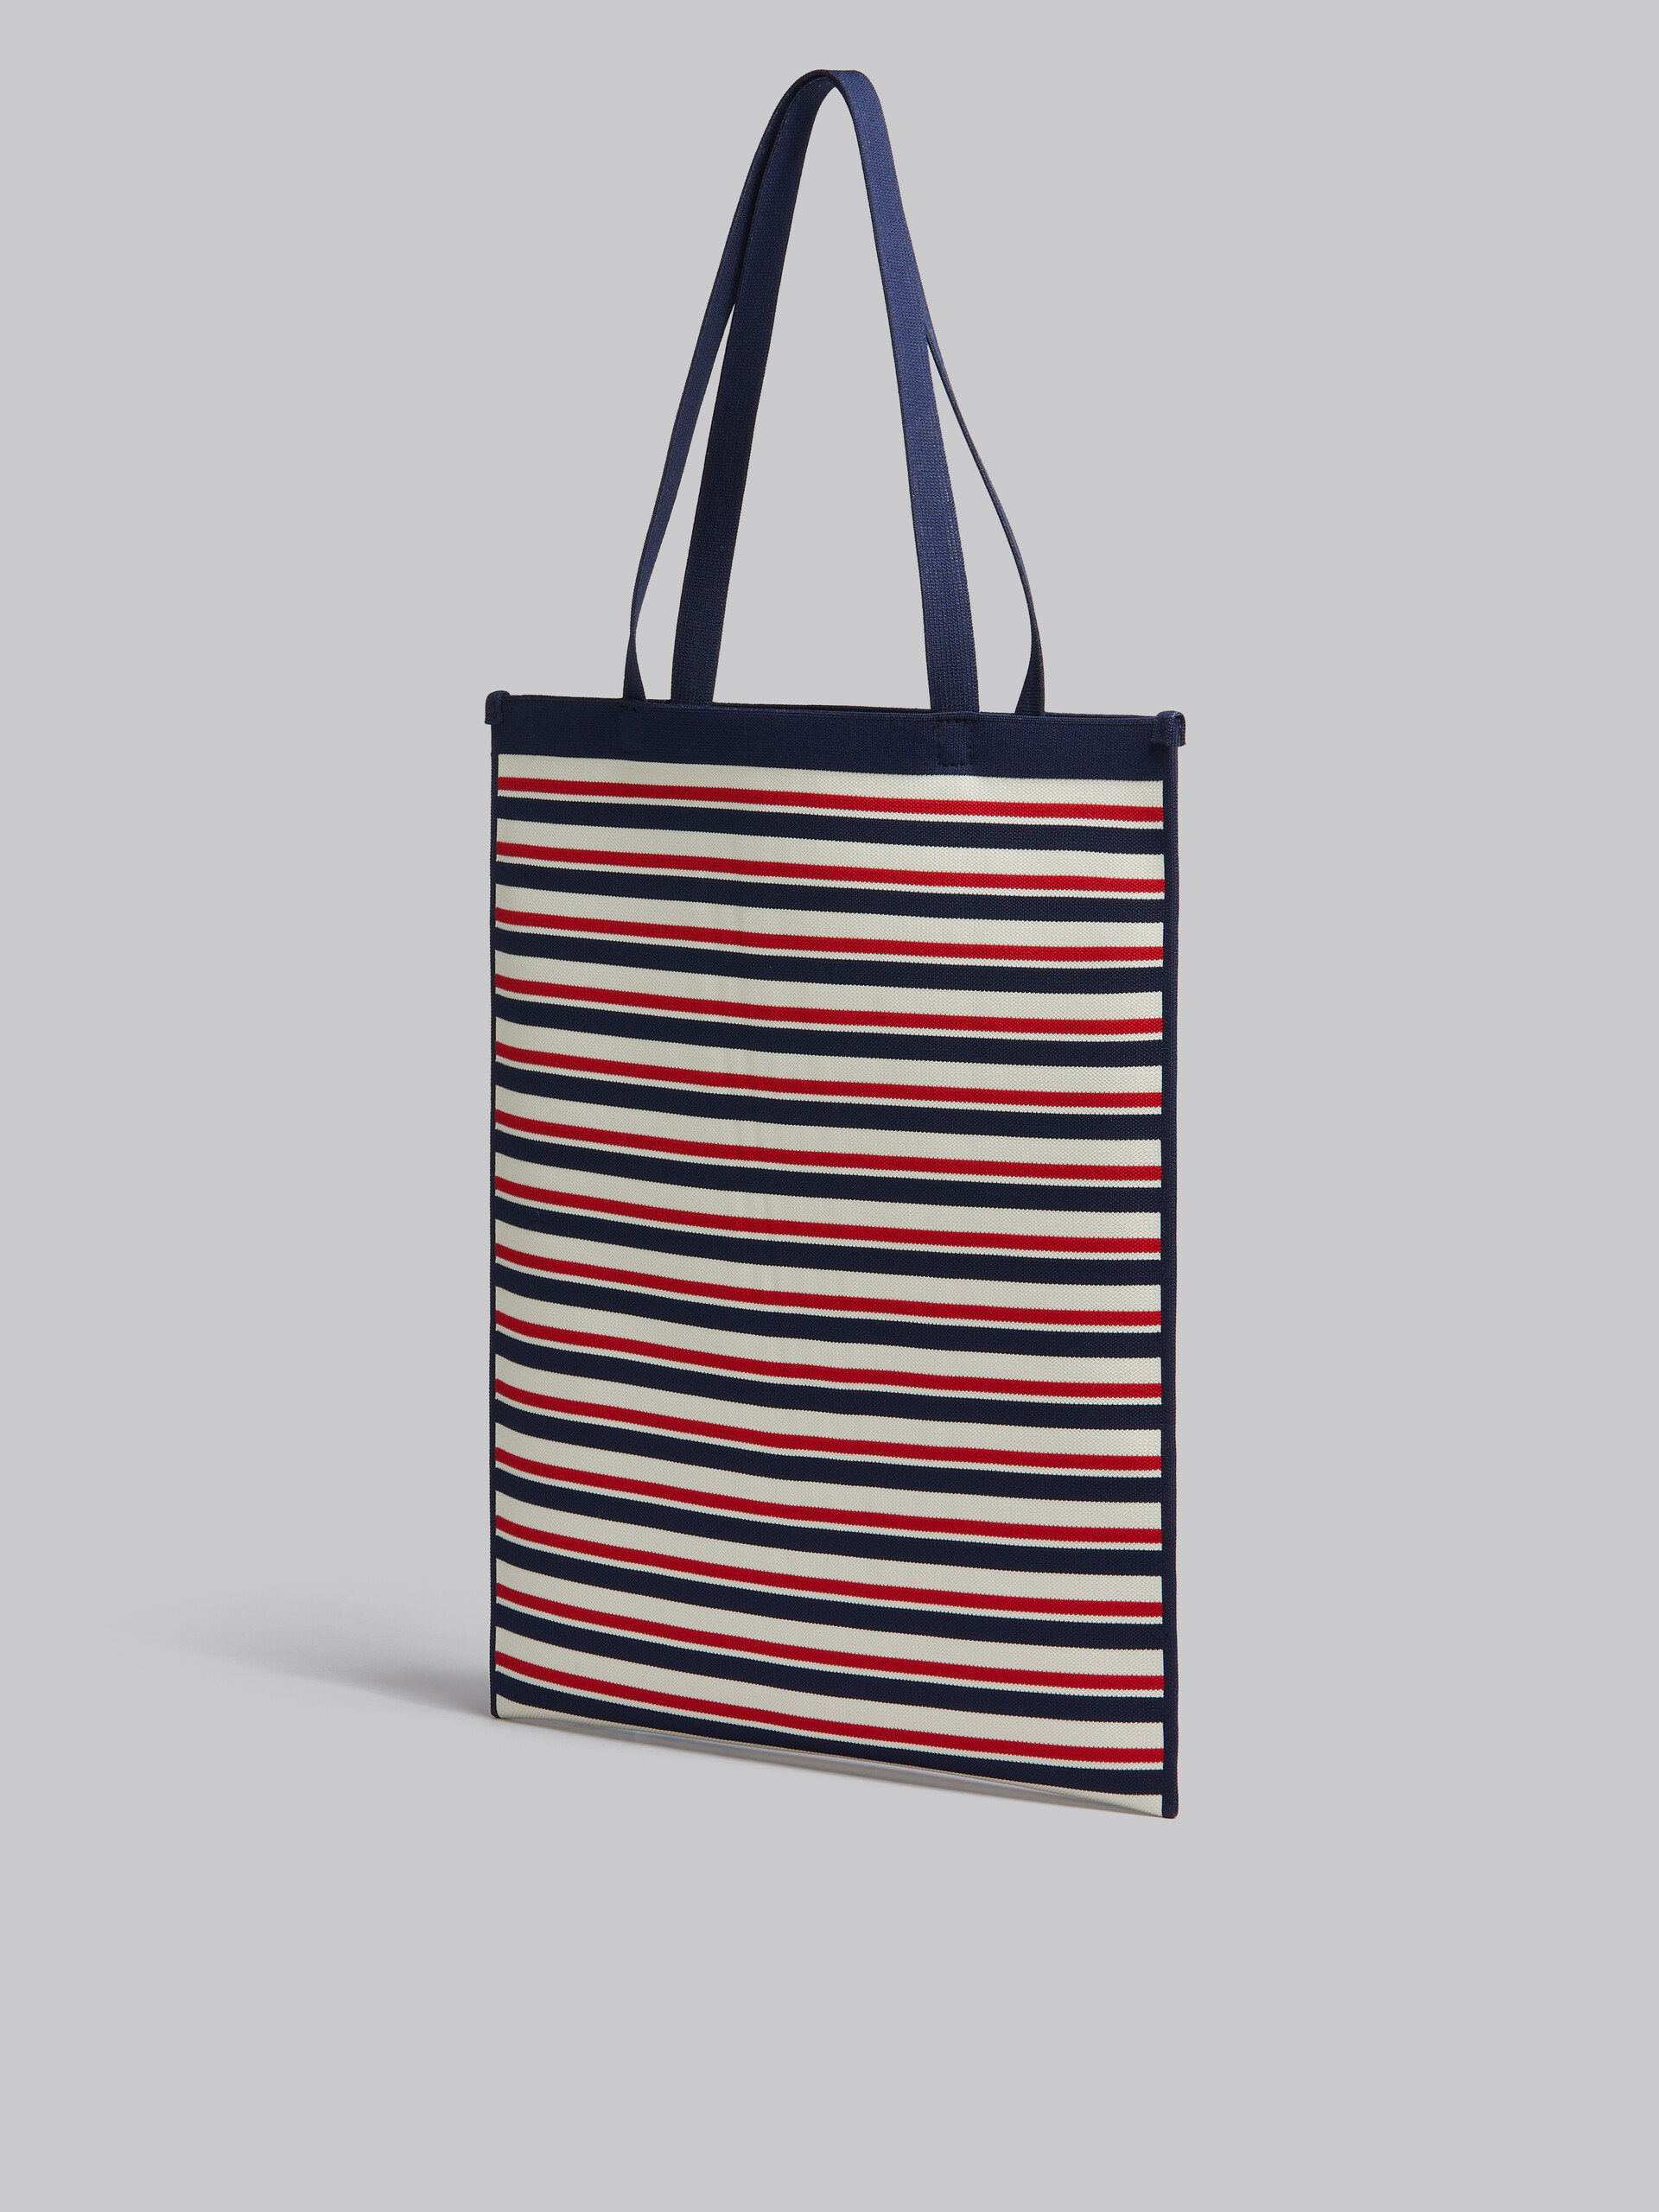 Bolso tote plano de jacquard a rayas azul marino, blanco y rojo - Bolsos shopper - Image 3